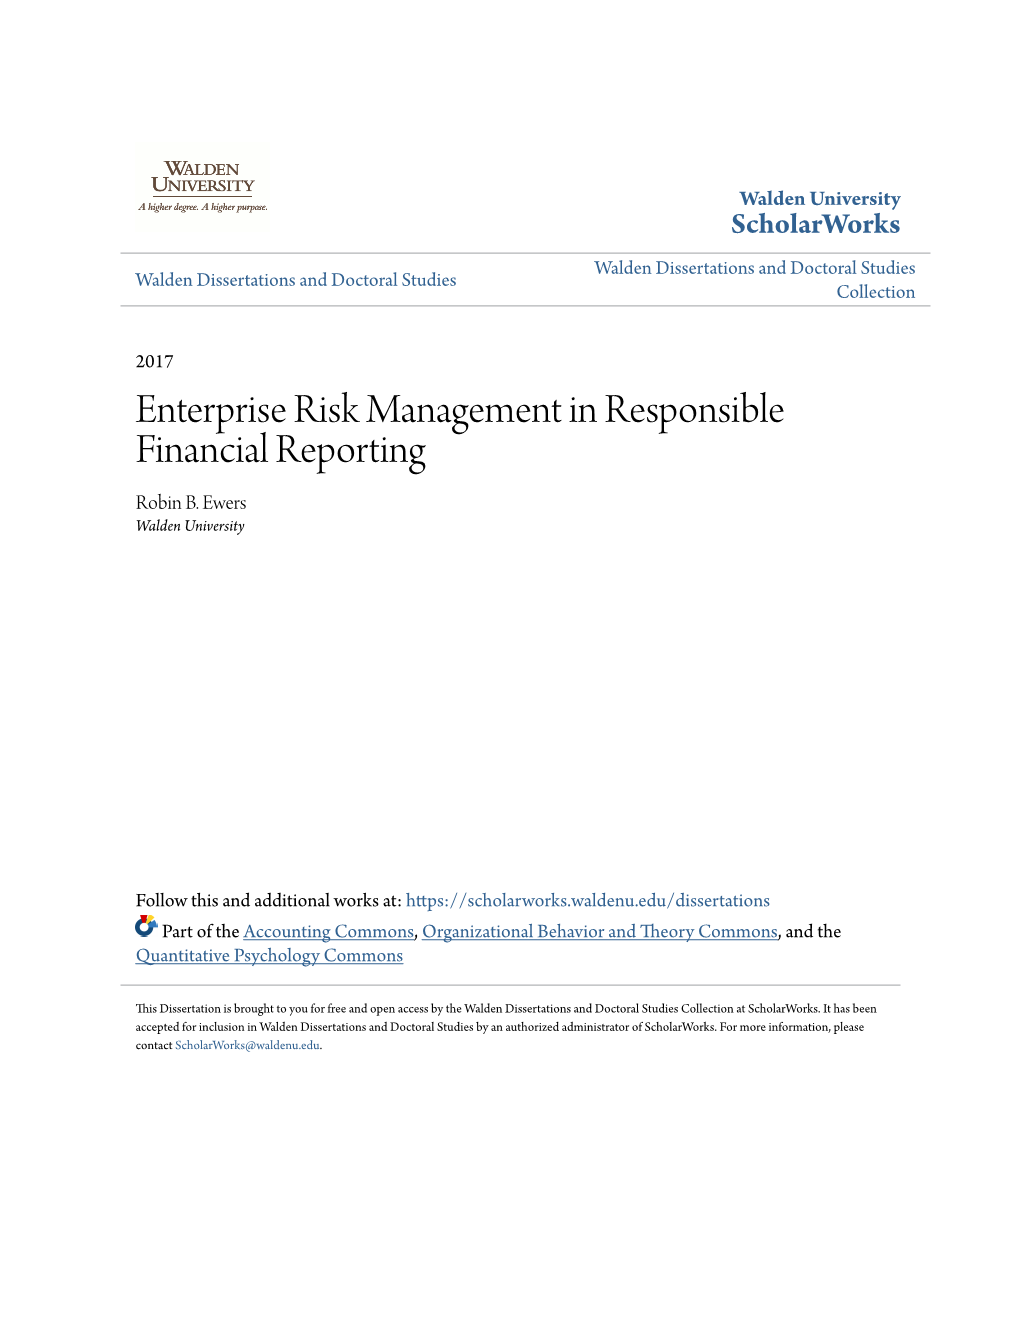 Enterprise Risk Management in Responsible Financial Reporting Robin B